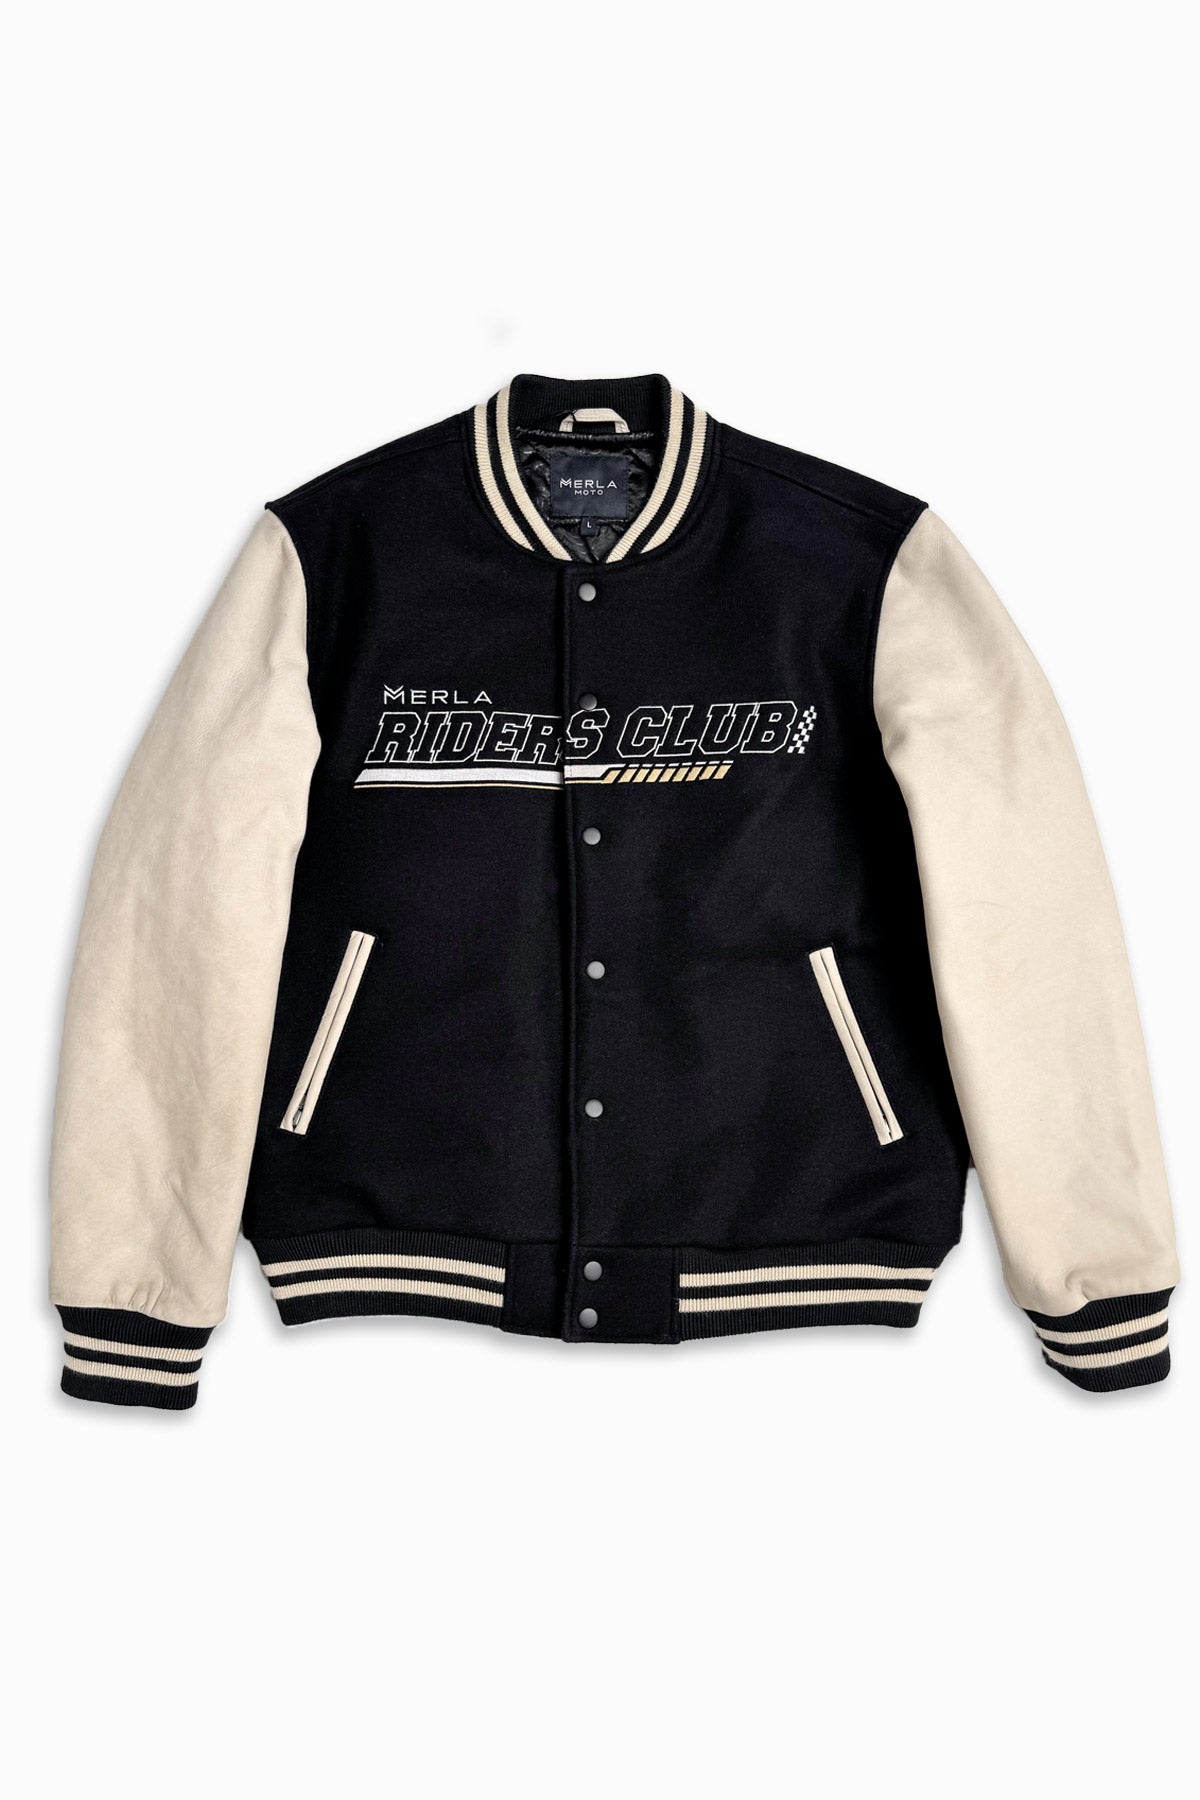 Riders Club Varsity Jacket